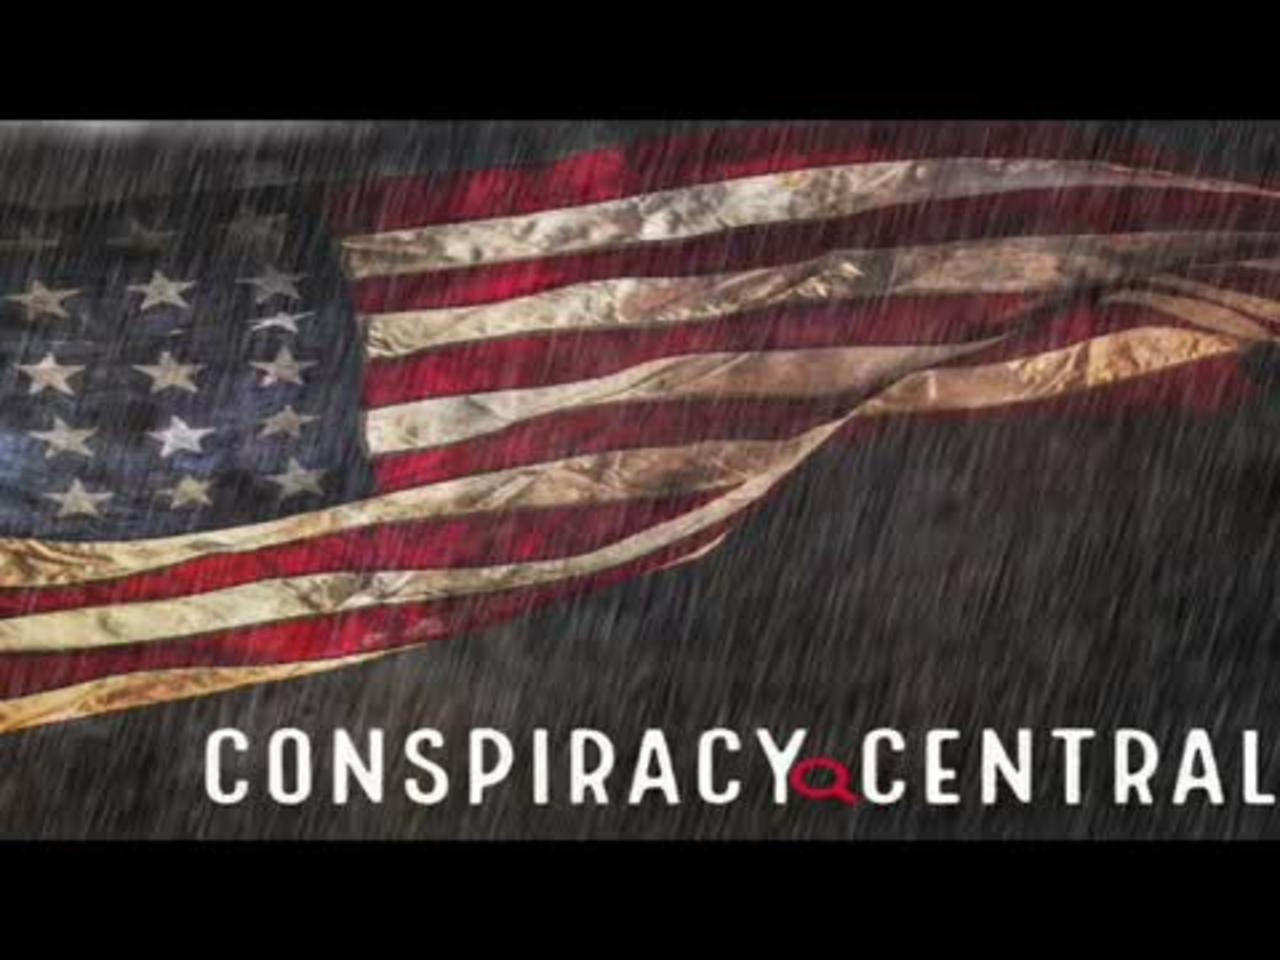 Conspiracy central 6/19/22